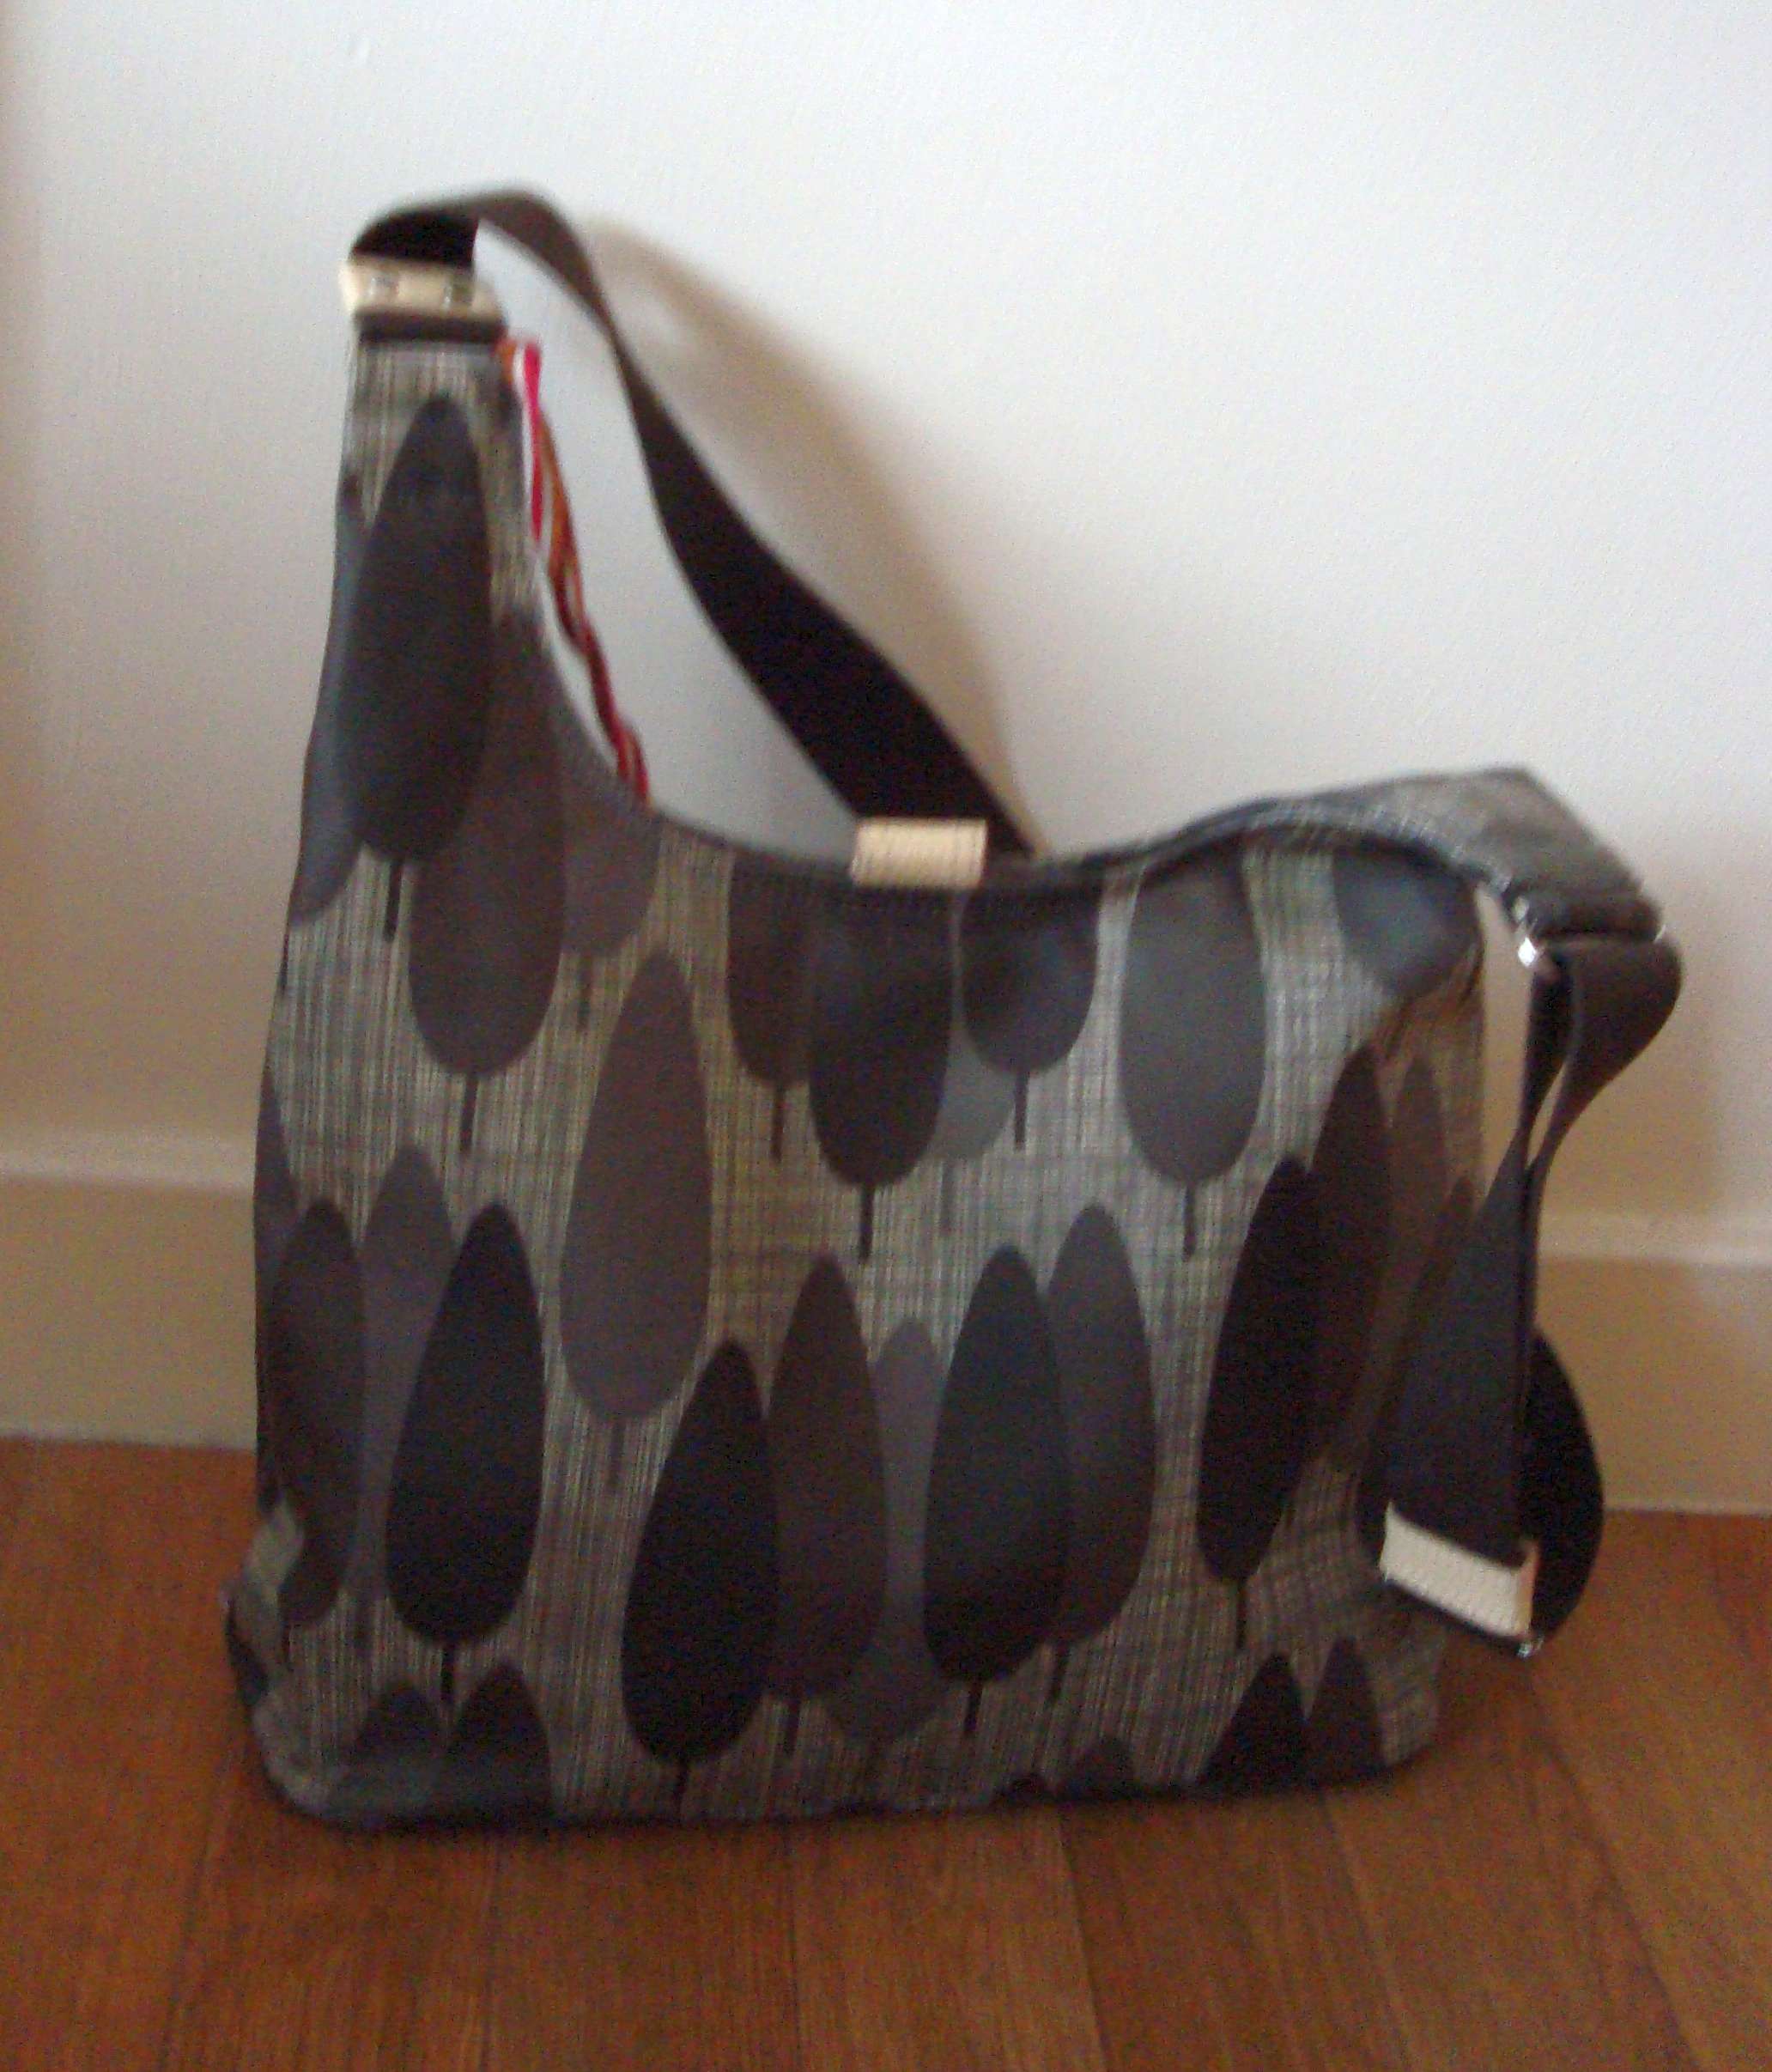 orla kiely handbags on sale